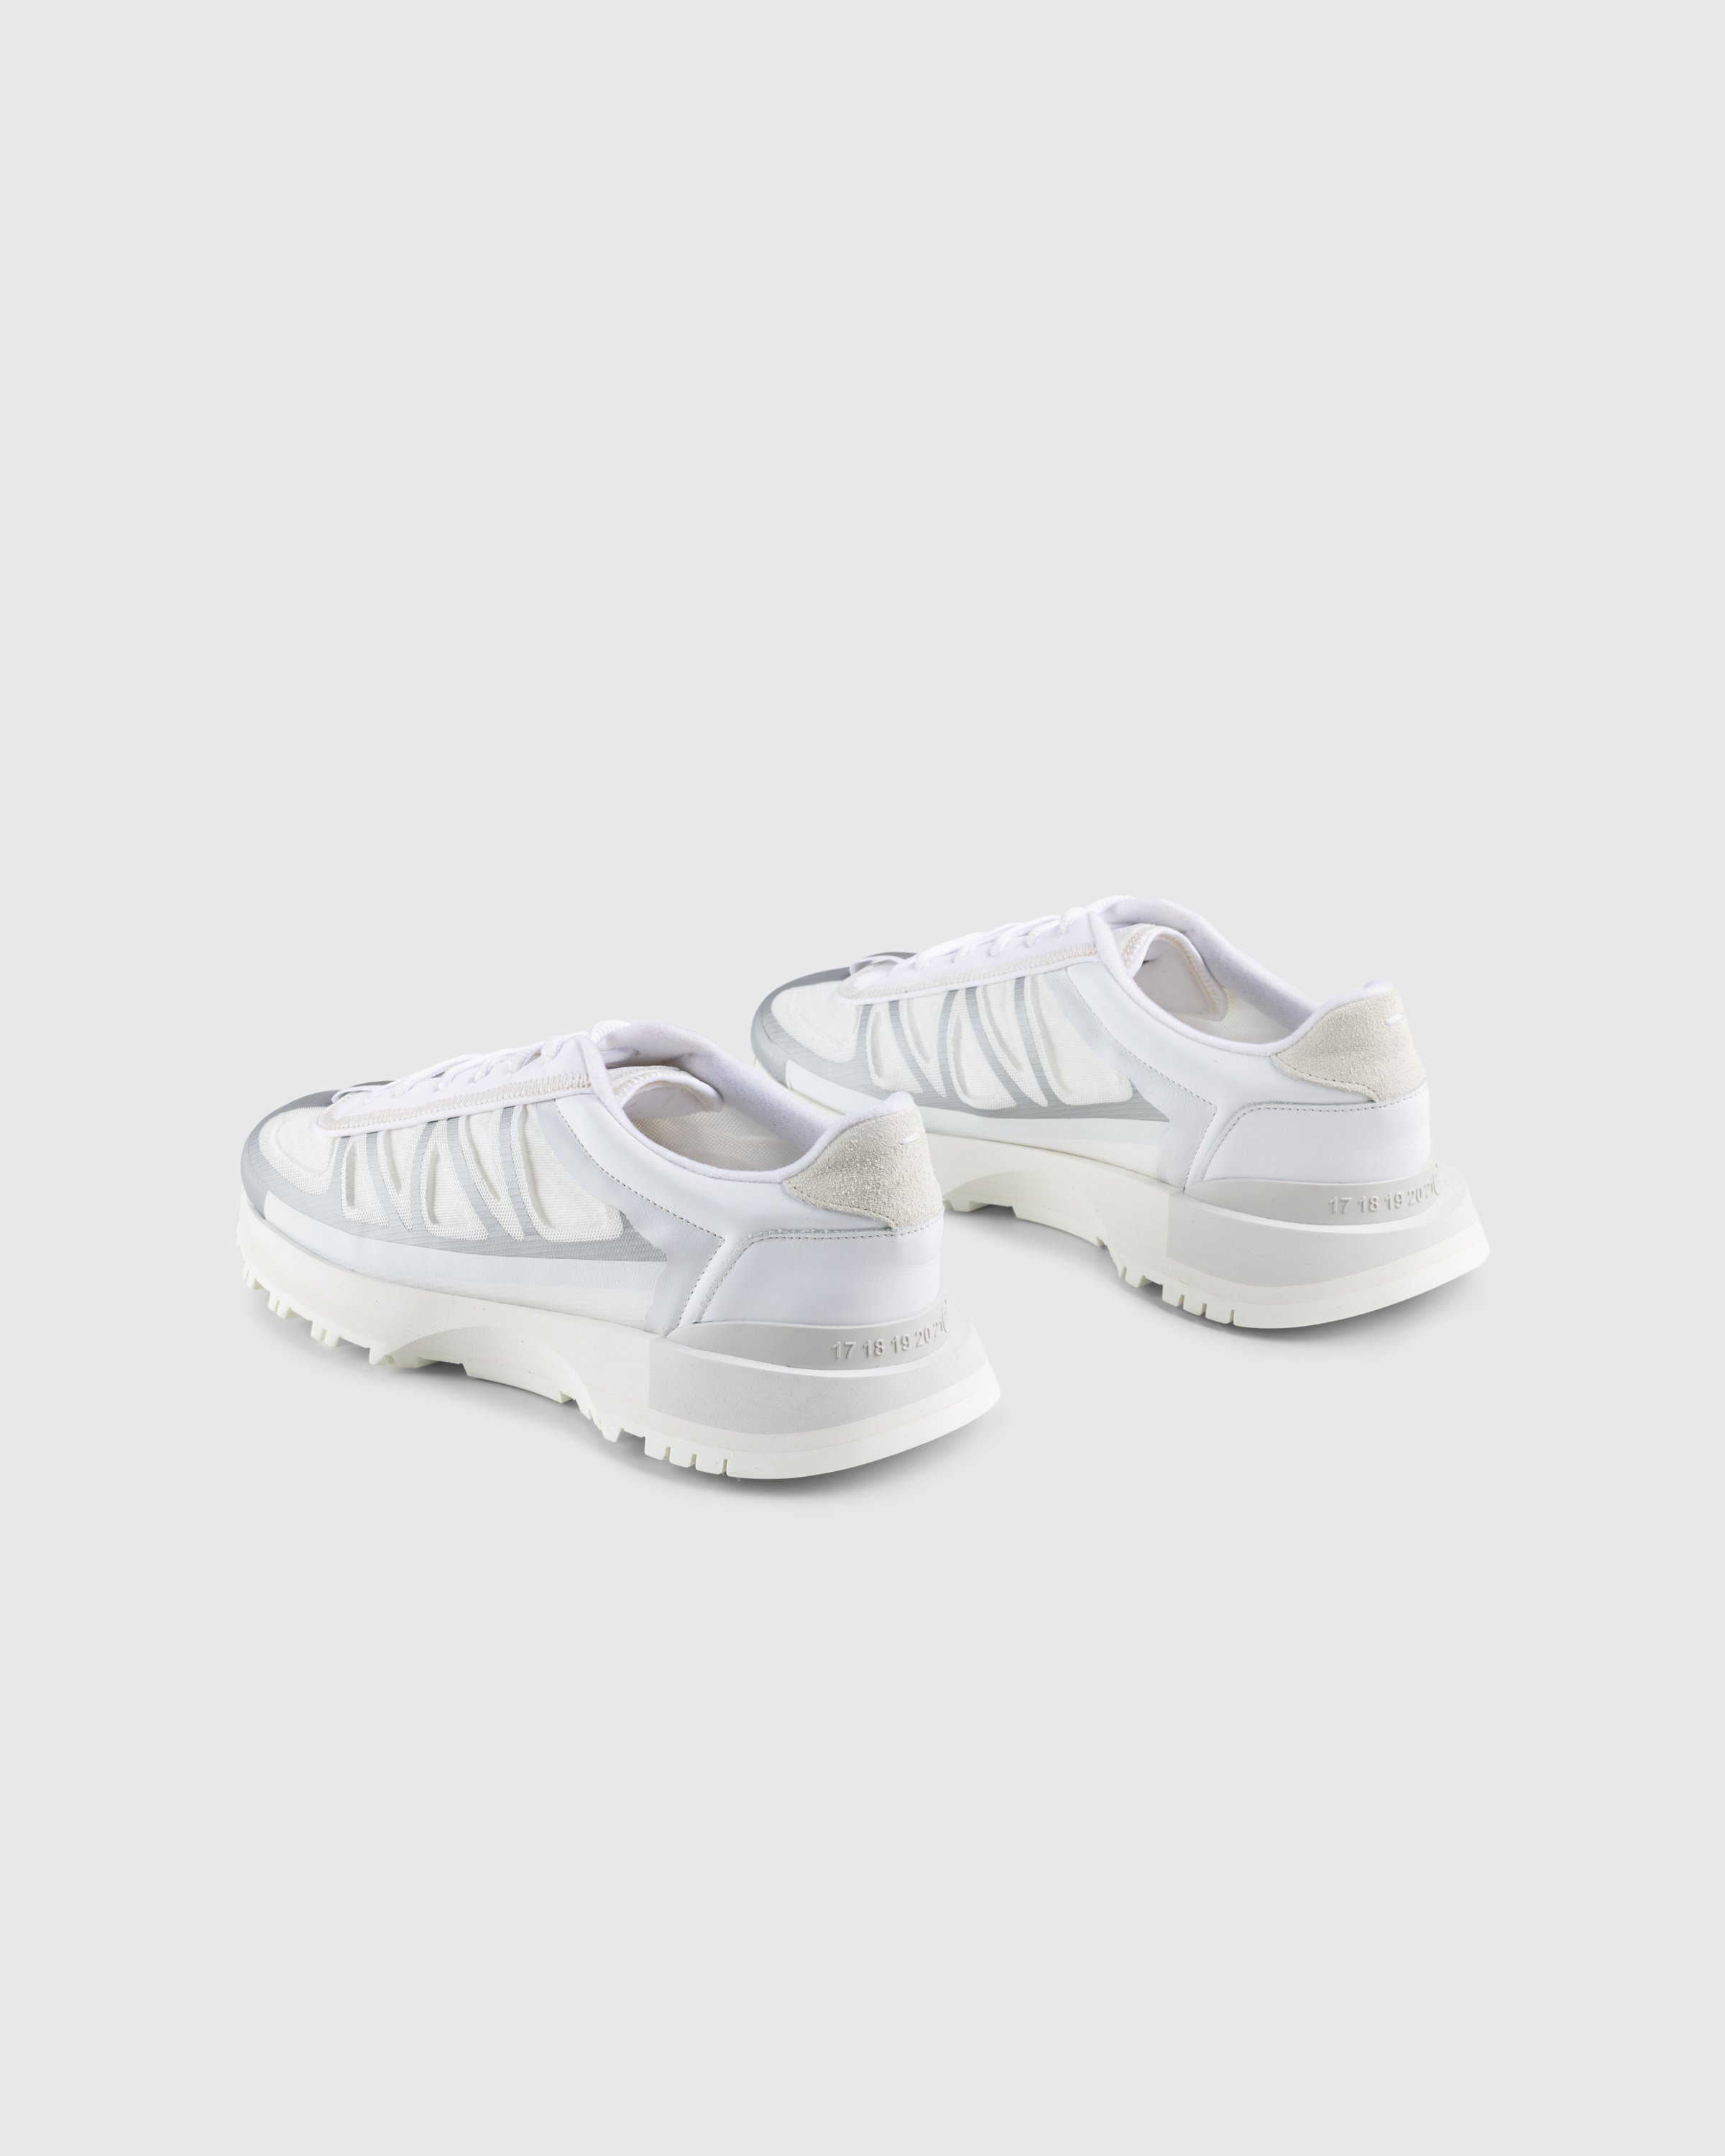 Maison Margiela - 50/50 Sneakers White - Footwear - White - Image 4